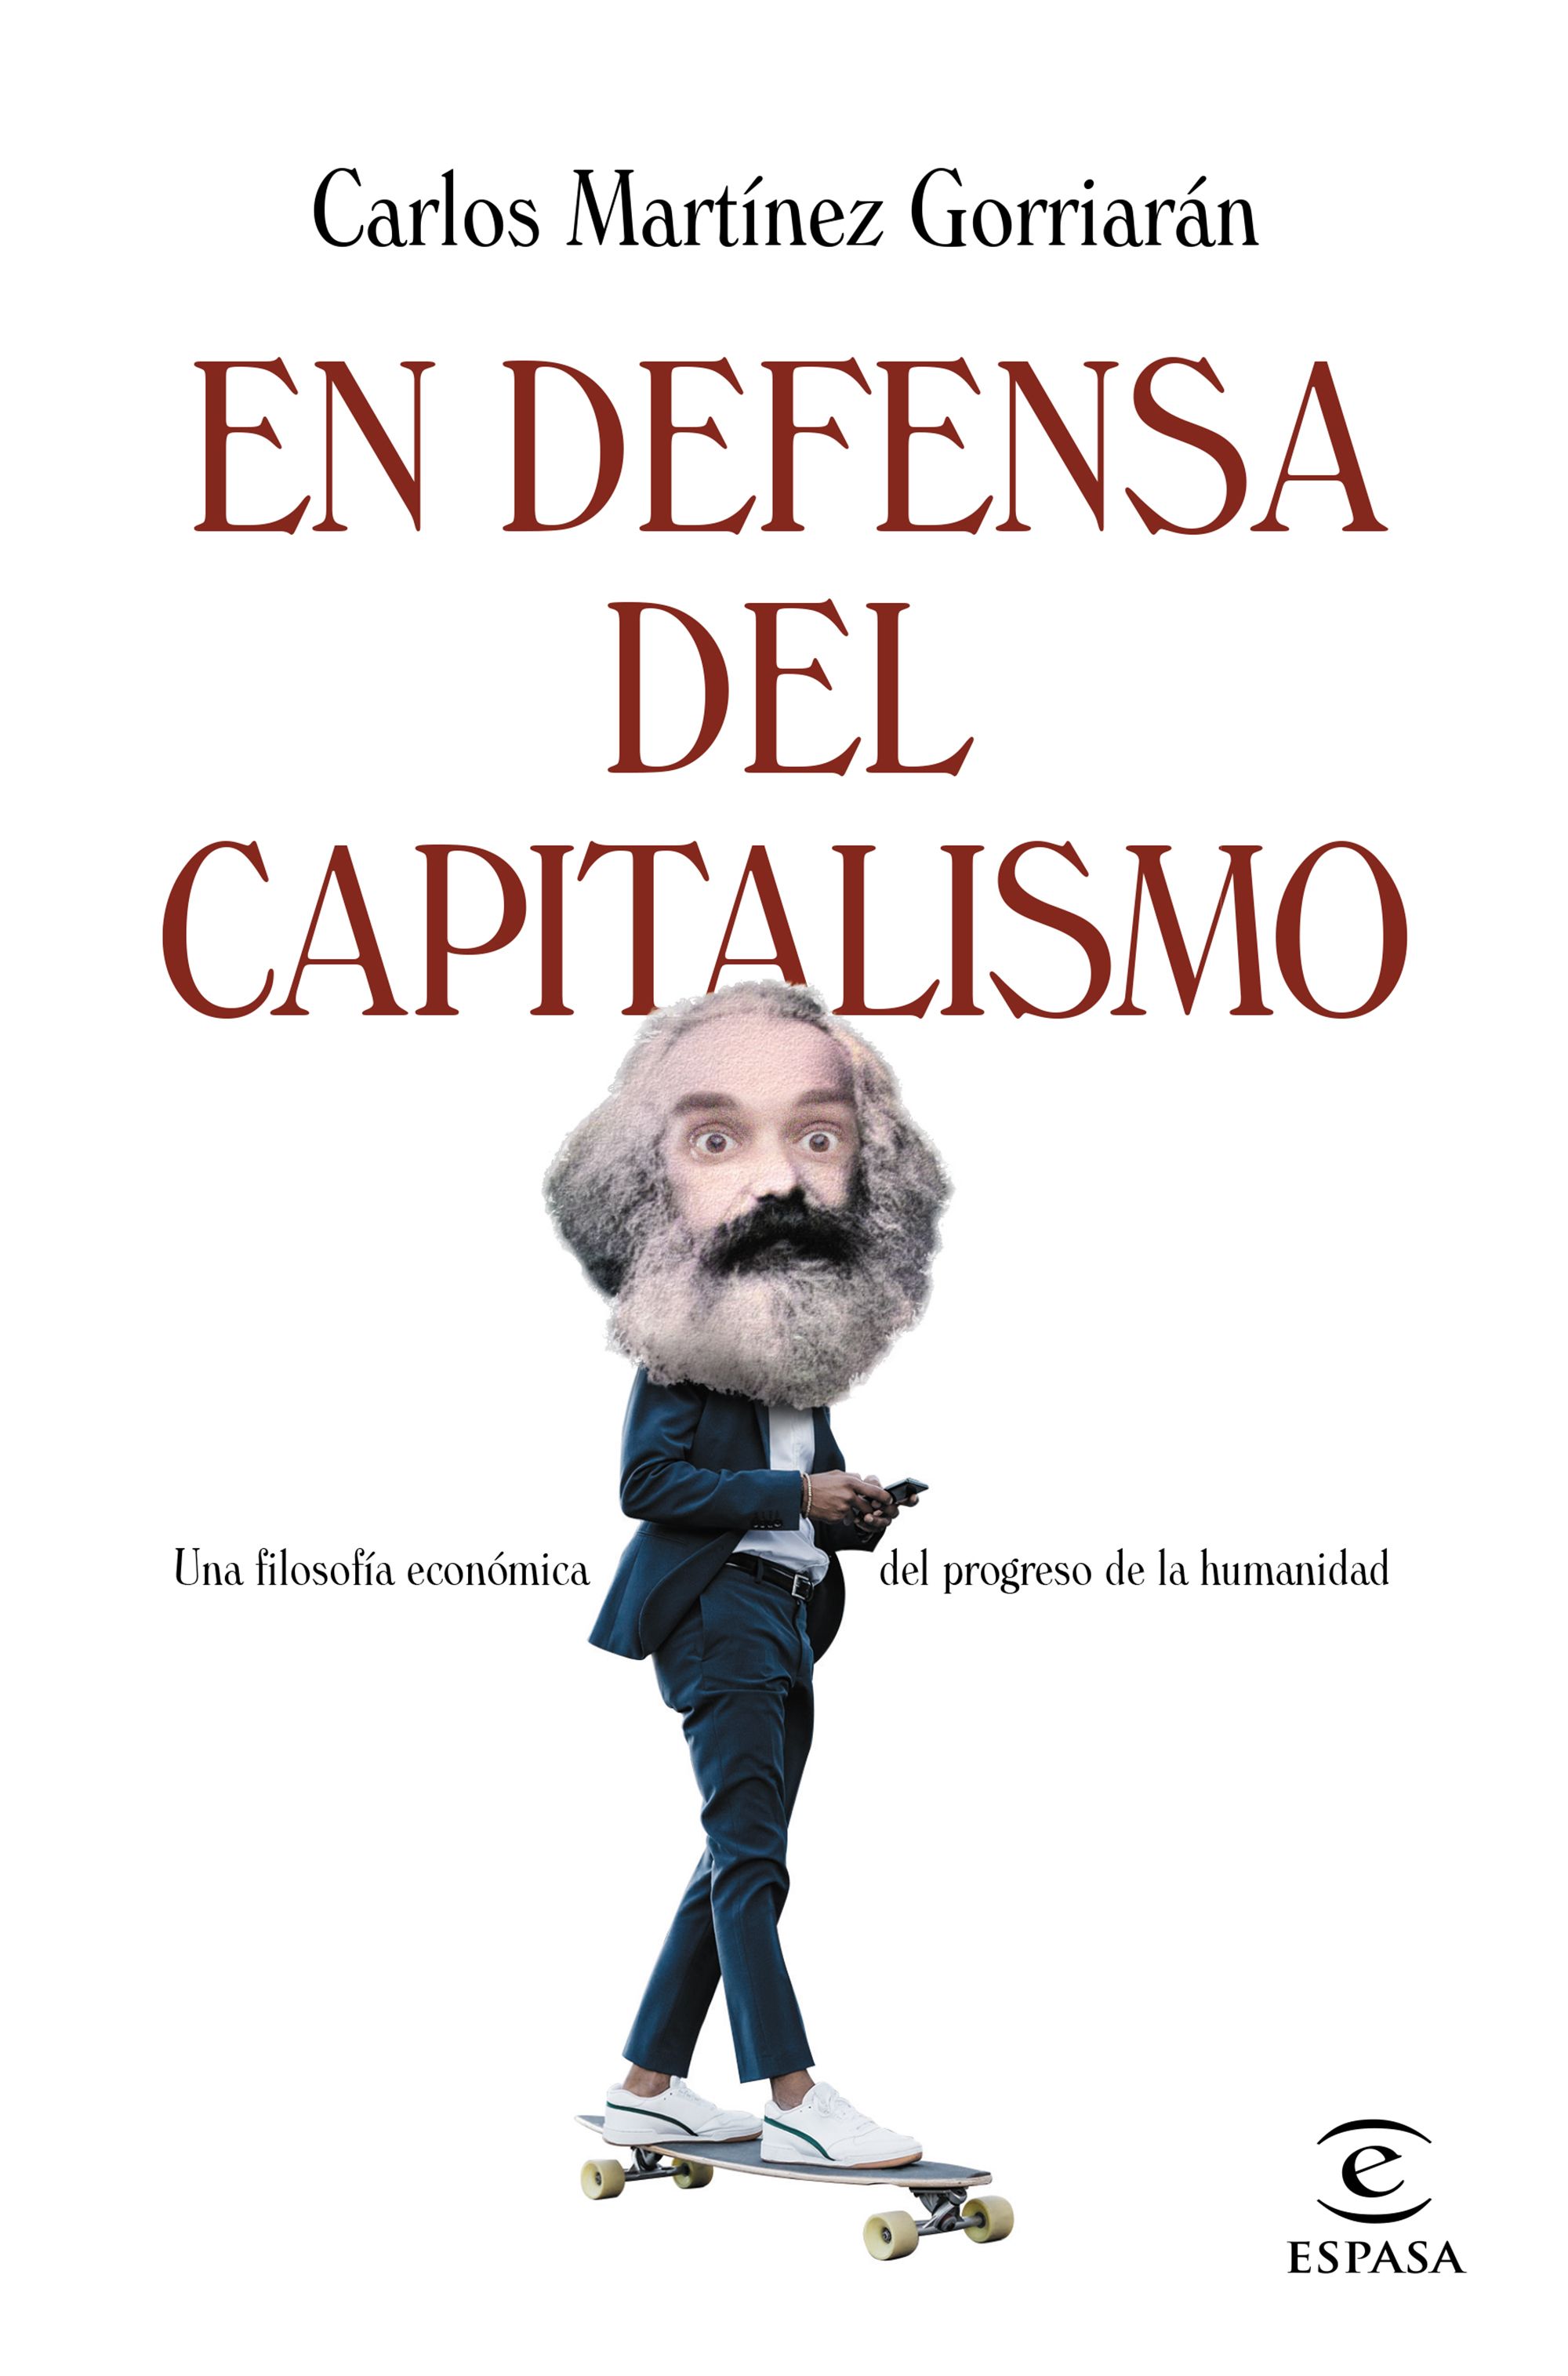 En defensa del capitalismo